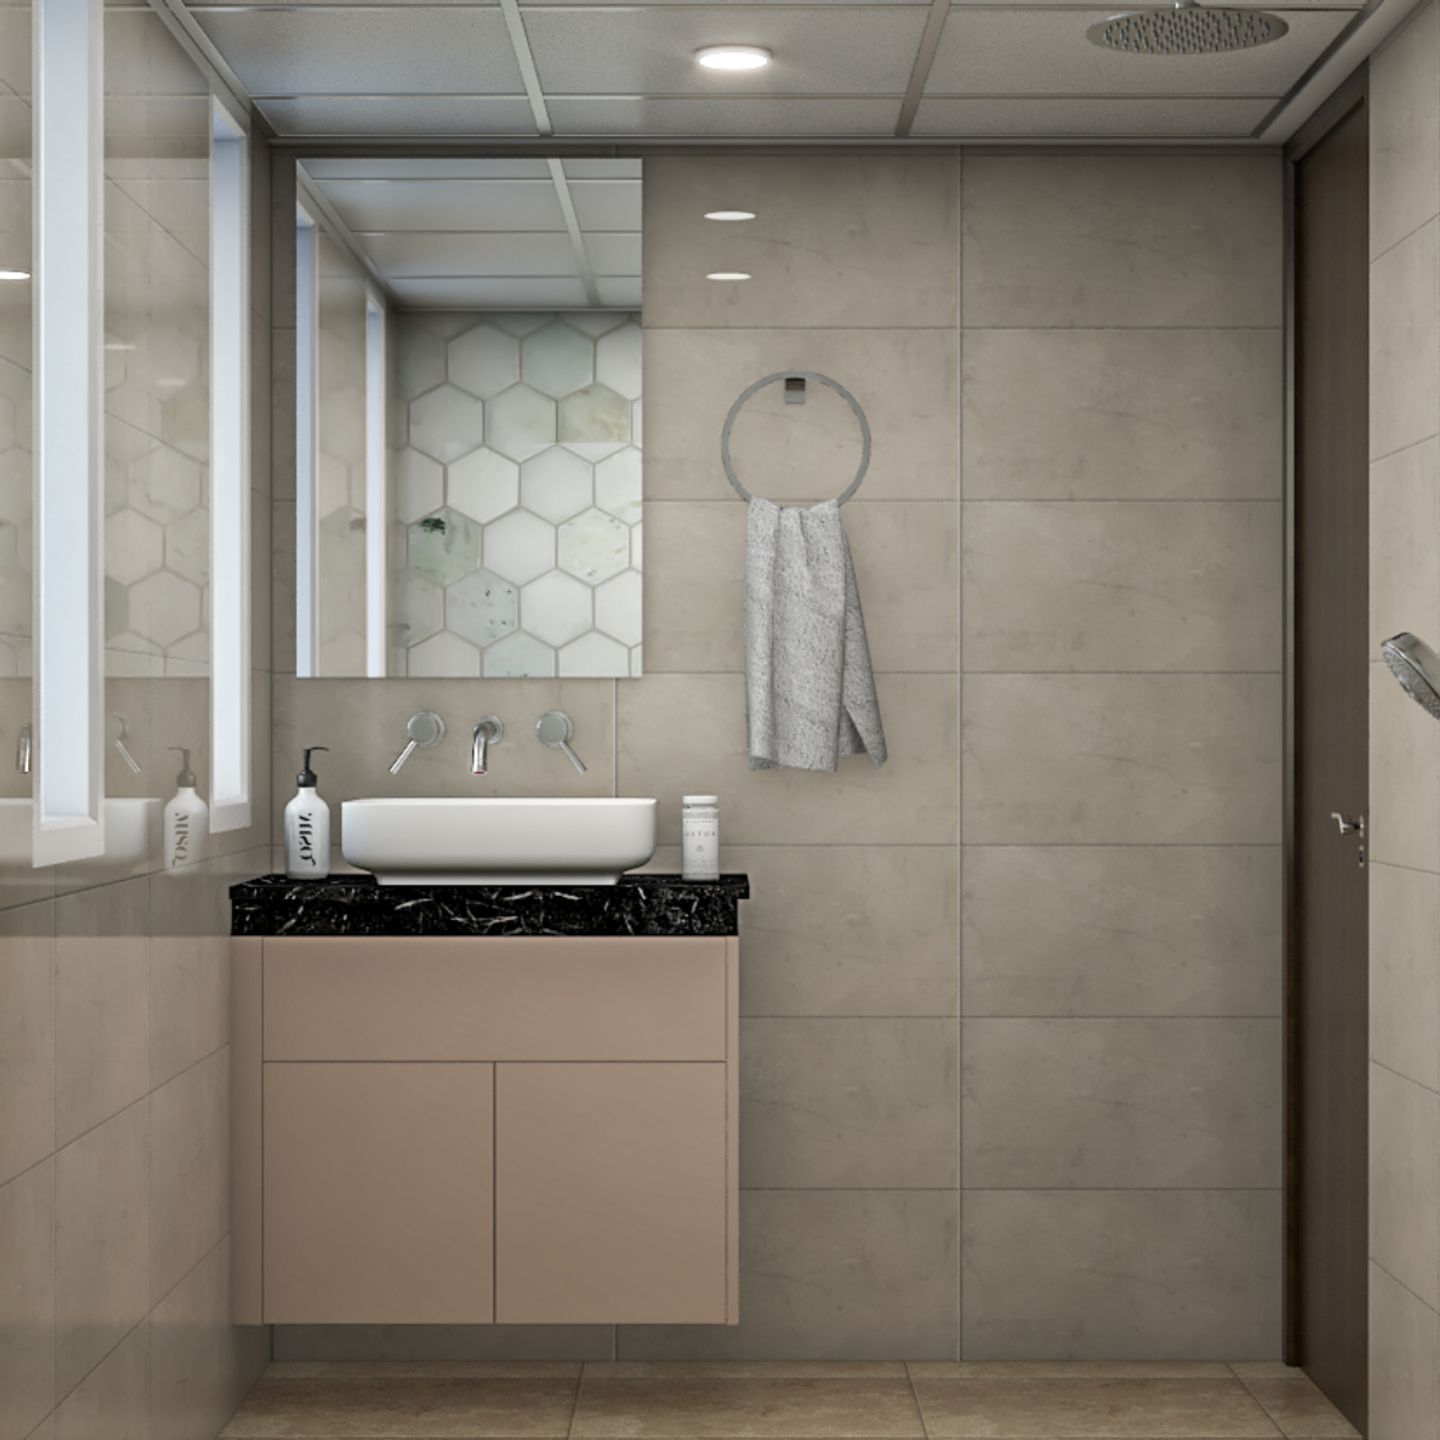 Small Bathroom Design With A Neutral Colour Palette - Livspace